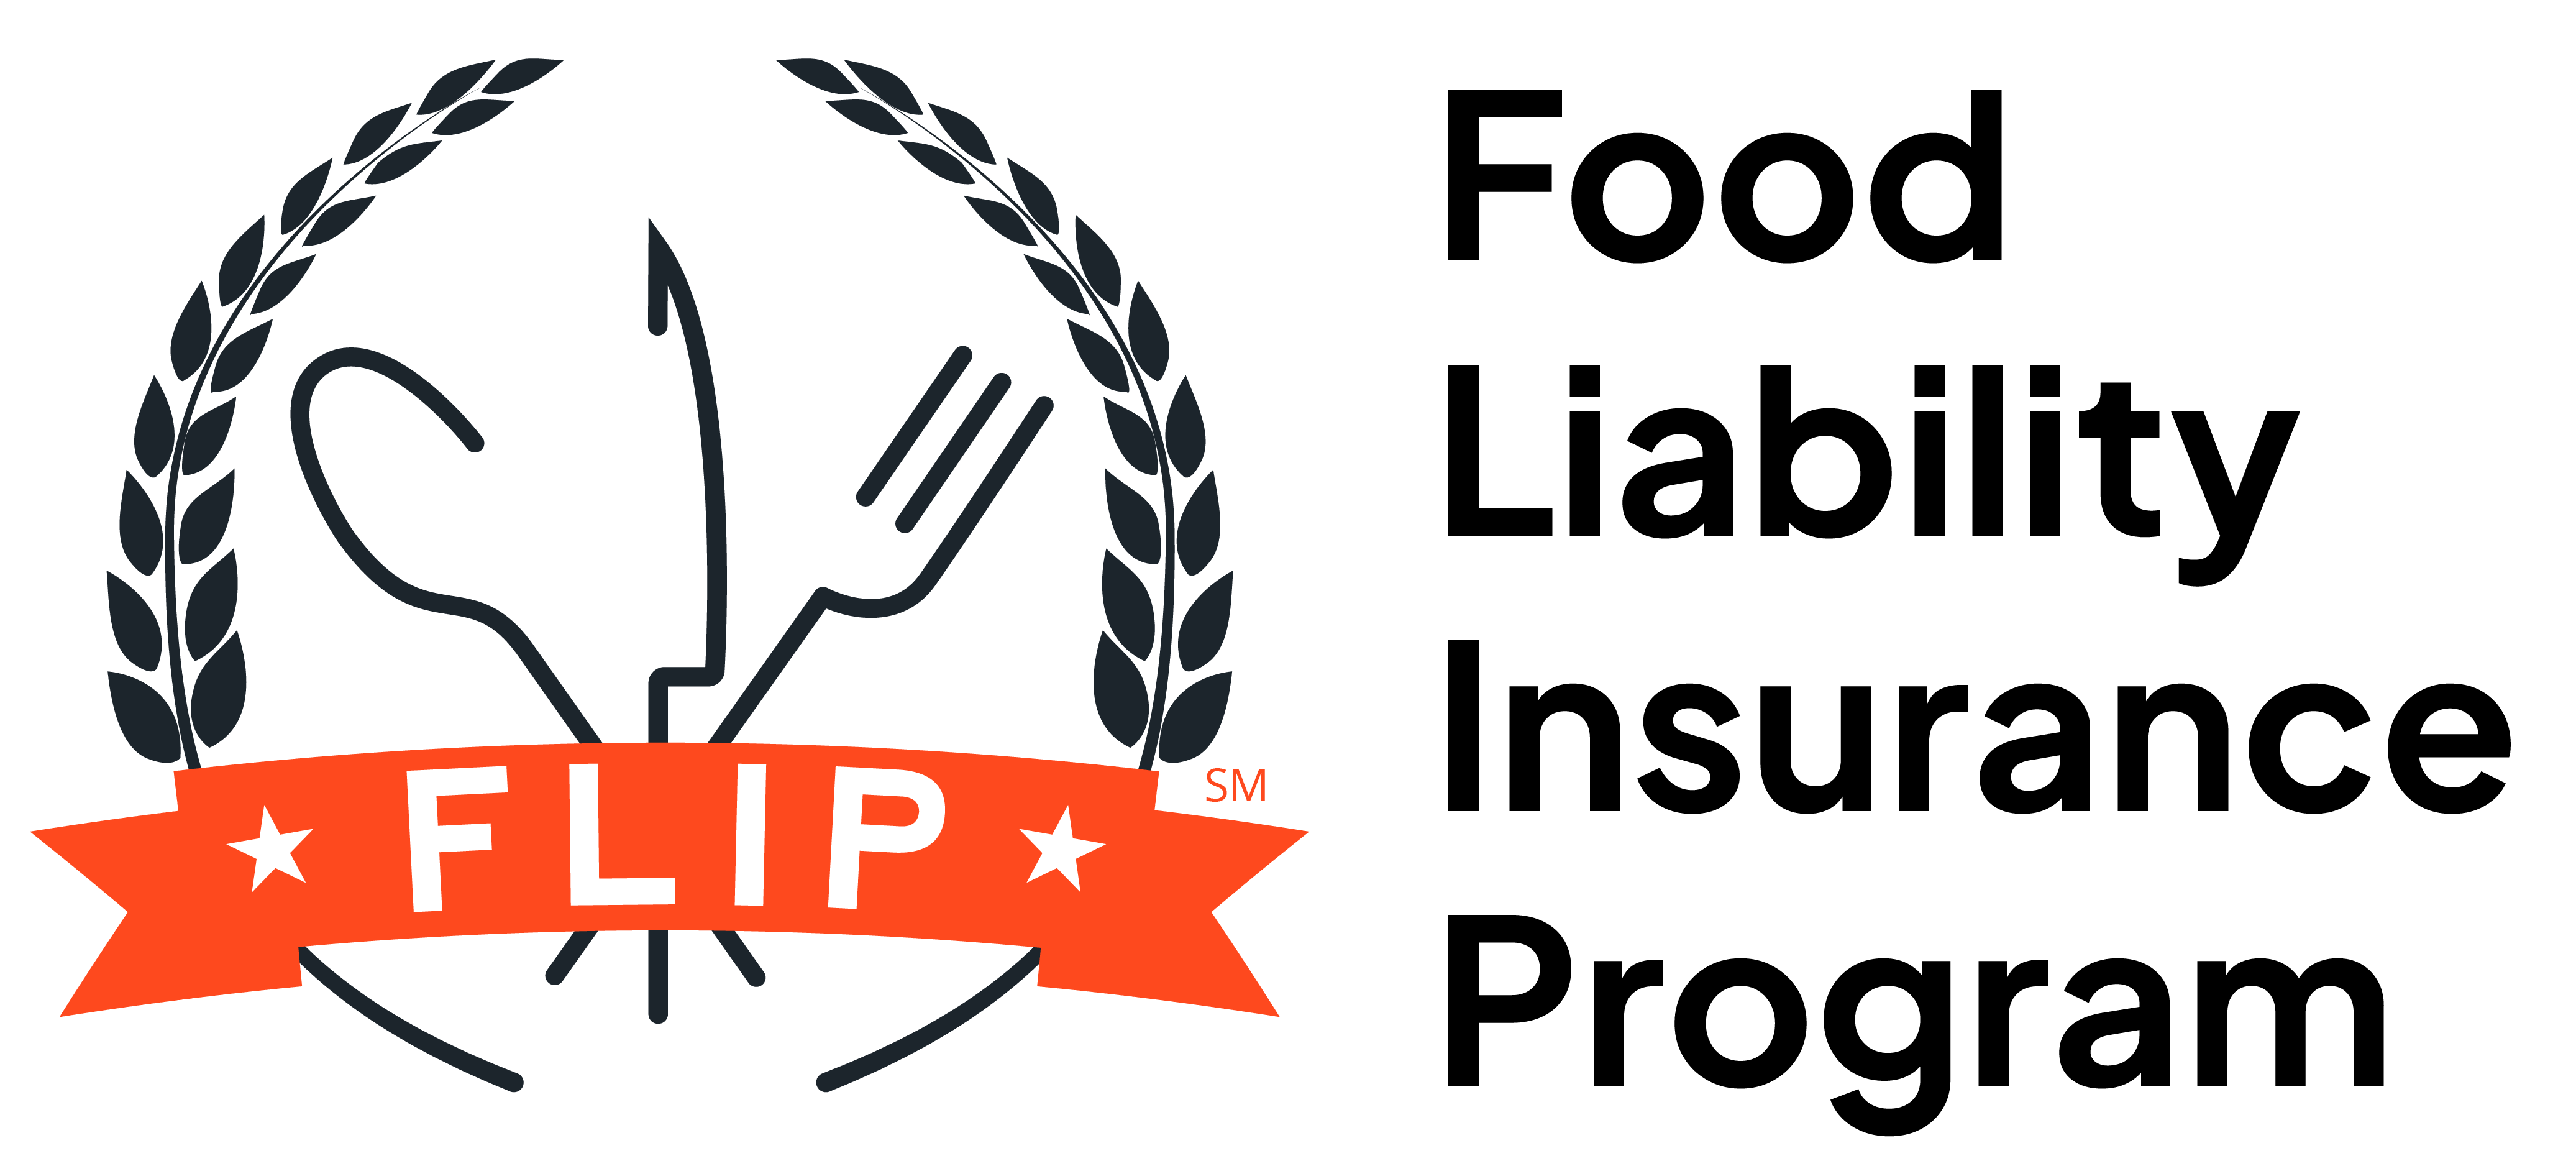 Food Liability Insurance Program (FLIP) Logo